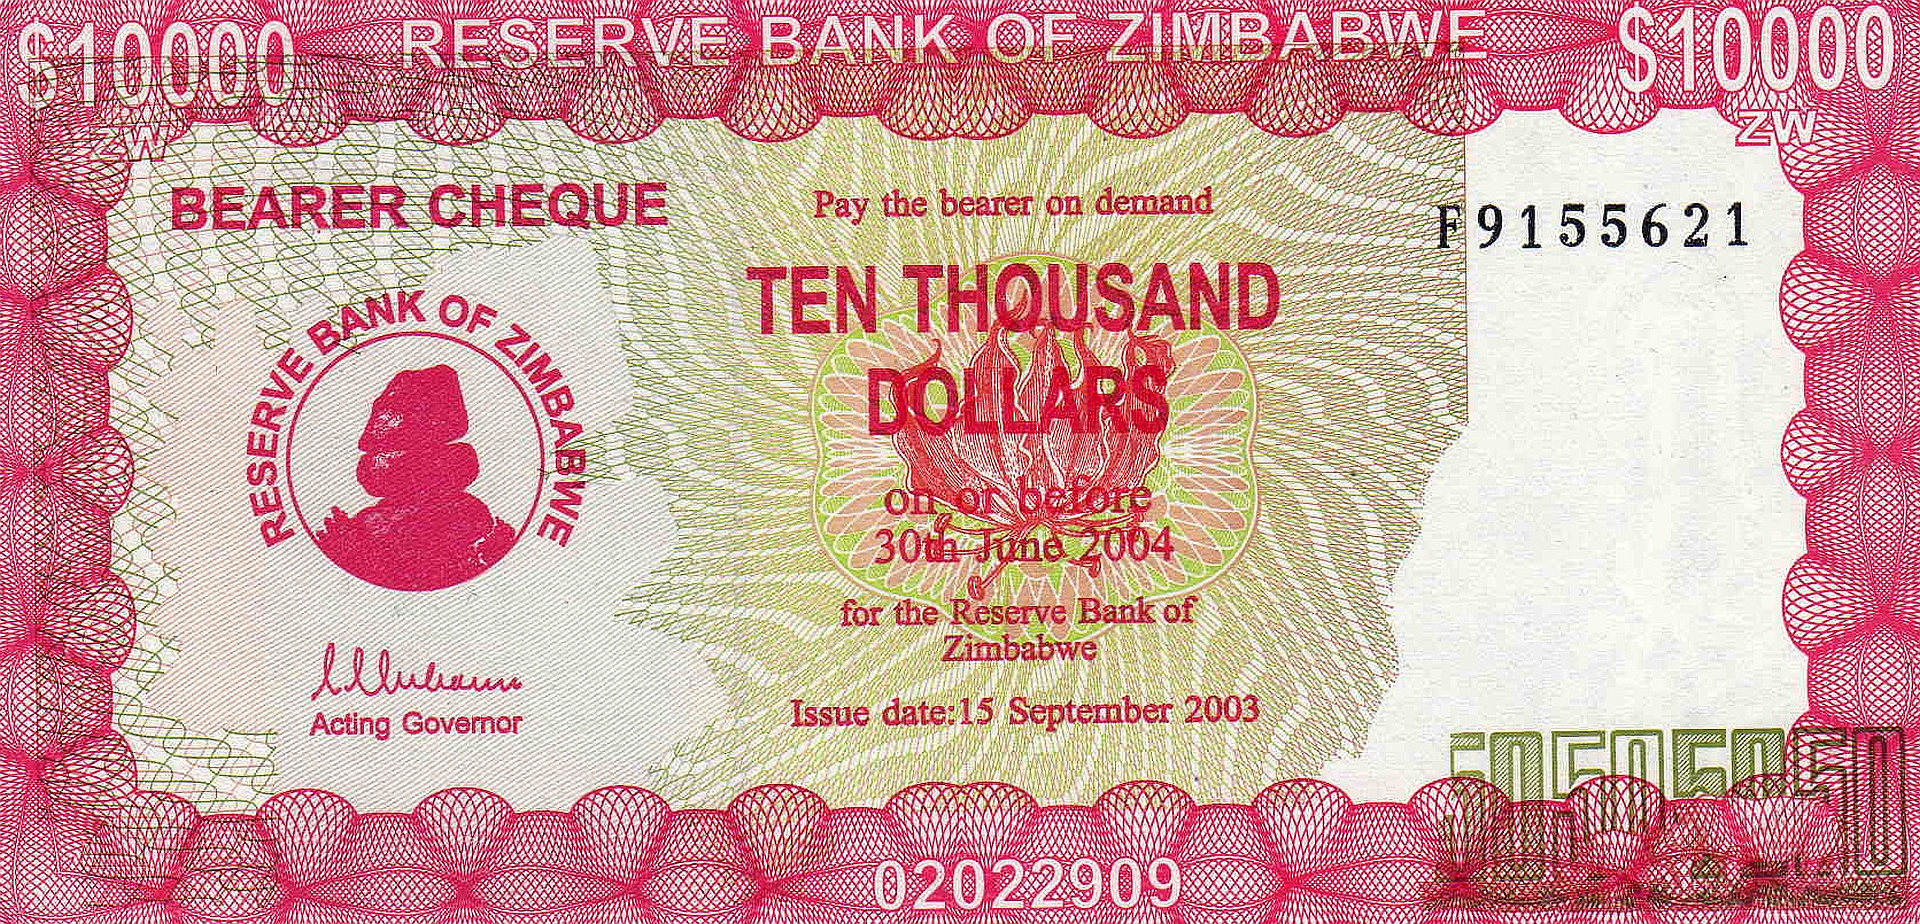 Zimbabwean Dollar Wallpapers